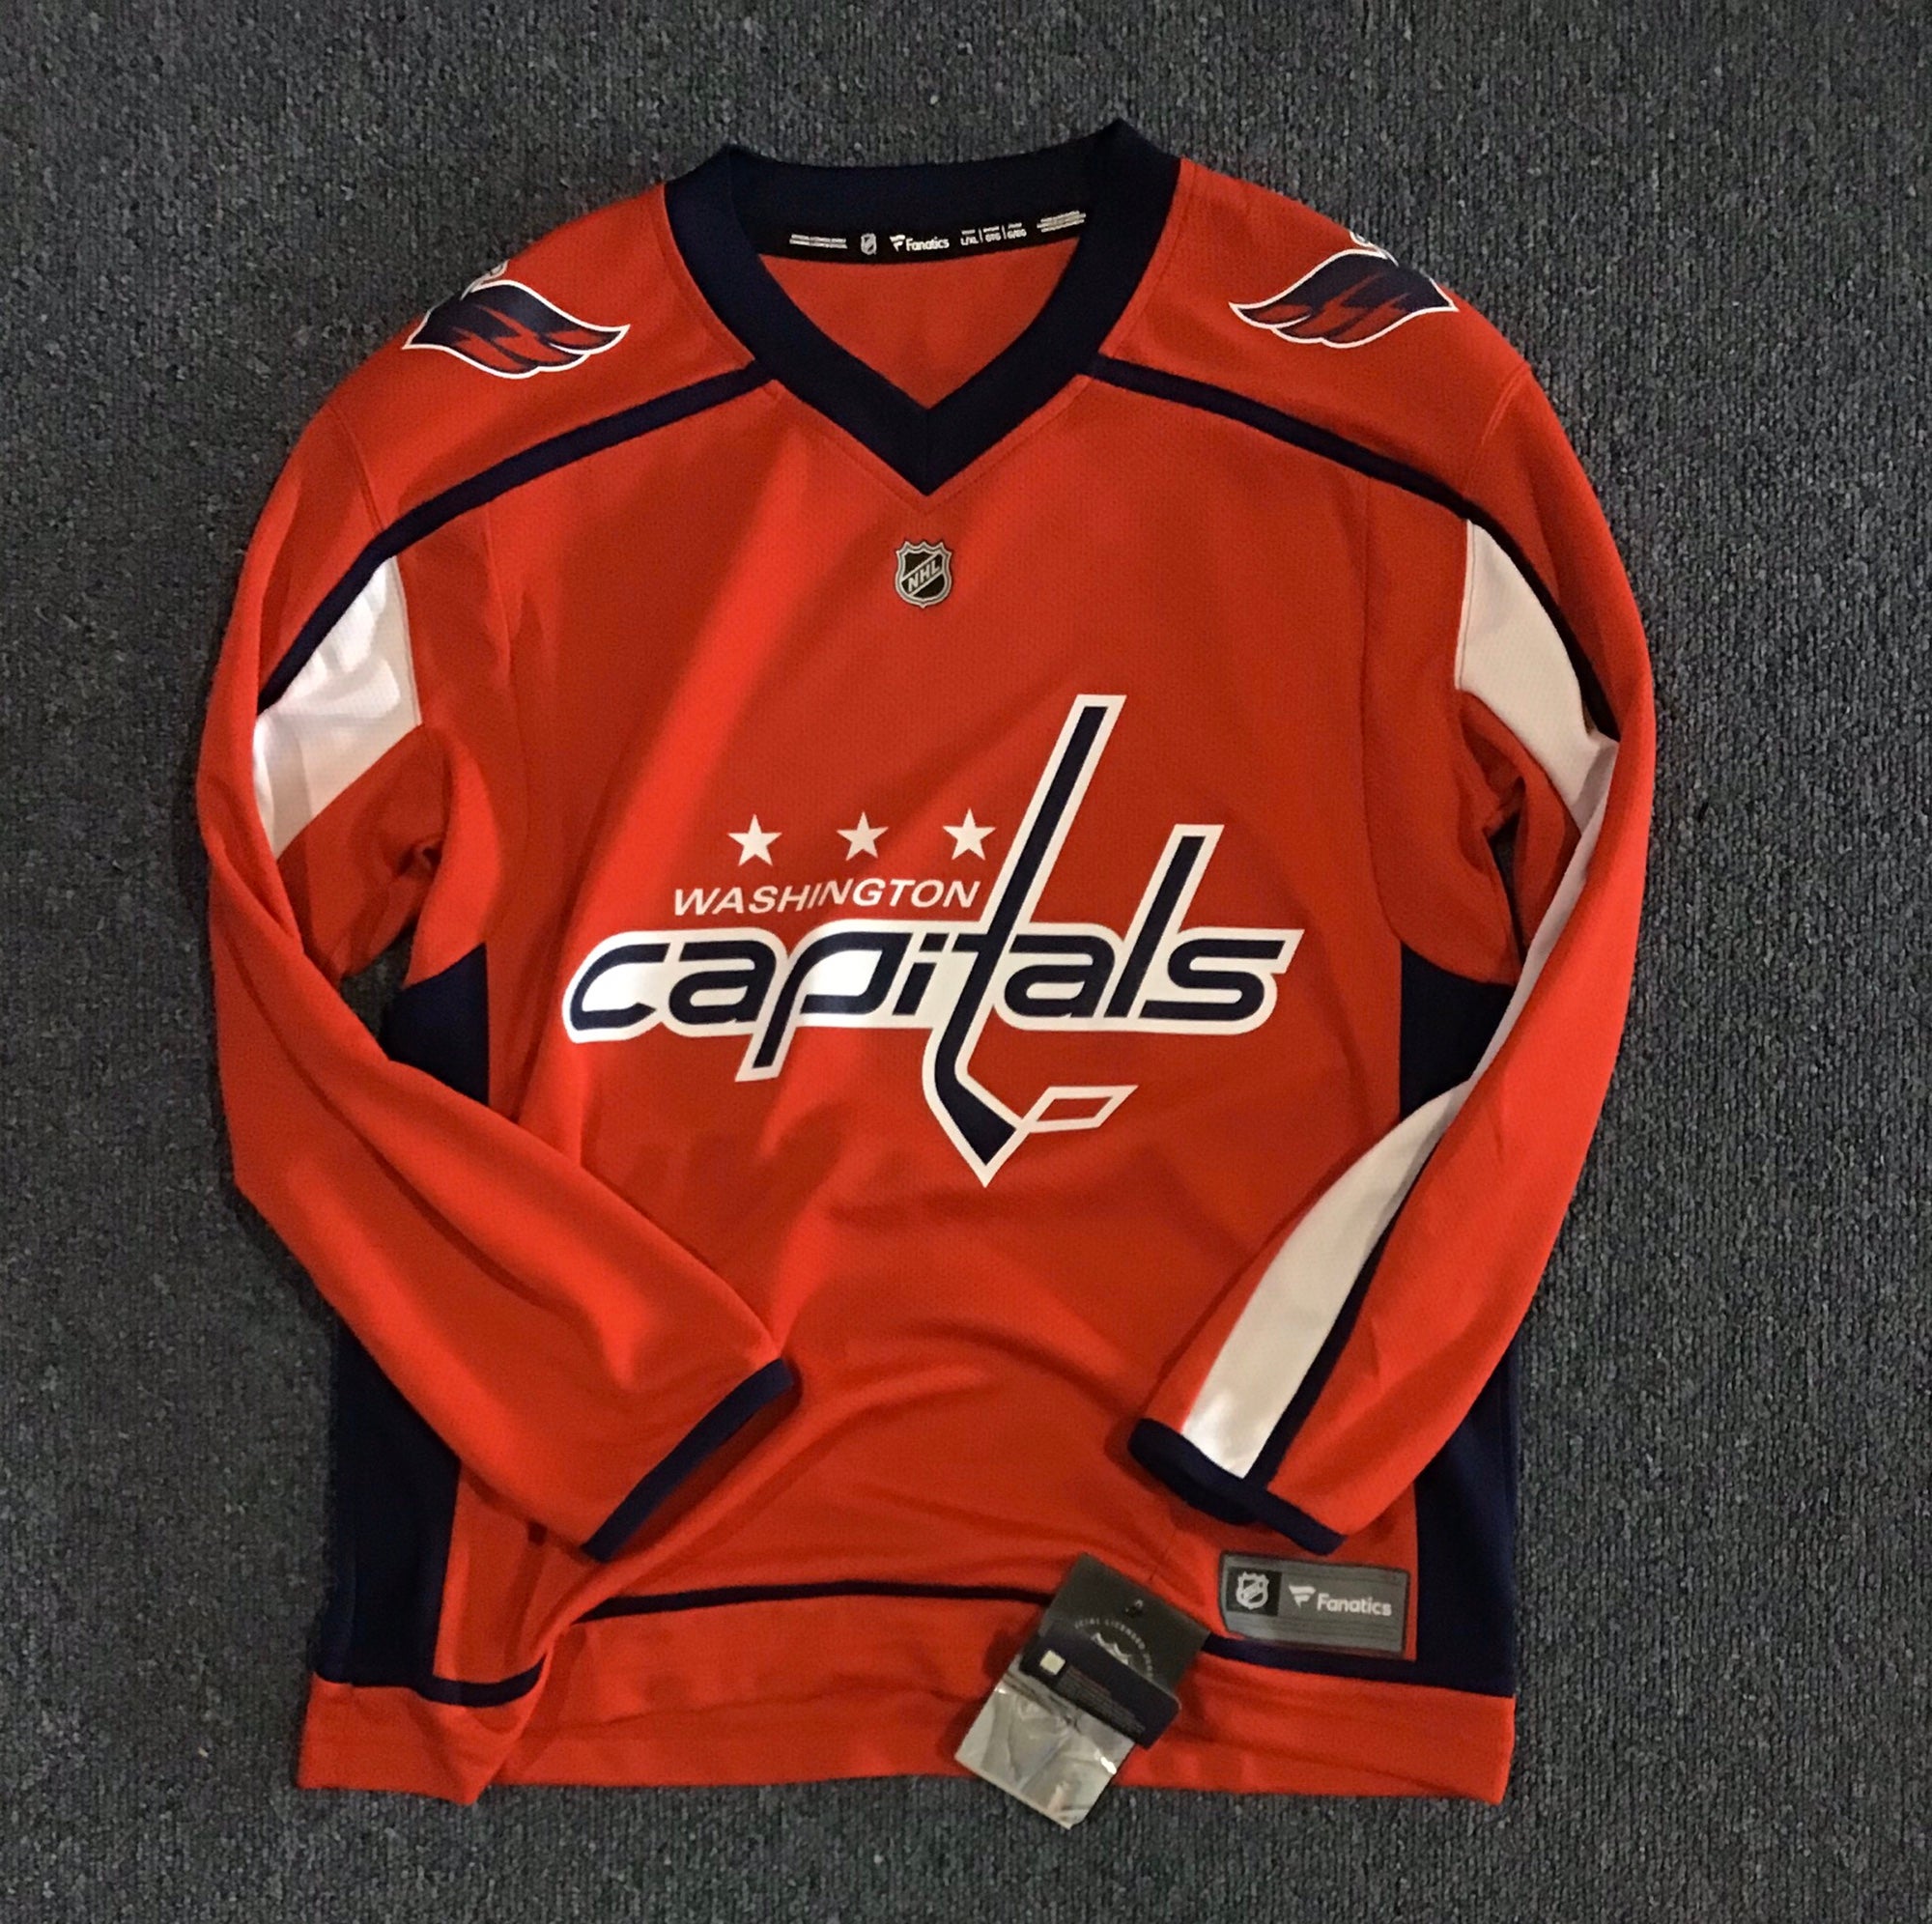 Washington Capitals Merchandise, Capitals Apparel, Jerseys & Gear